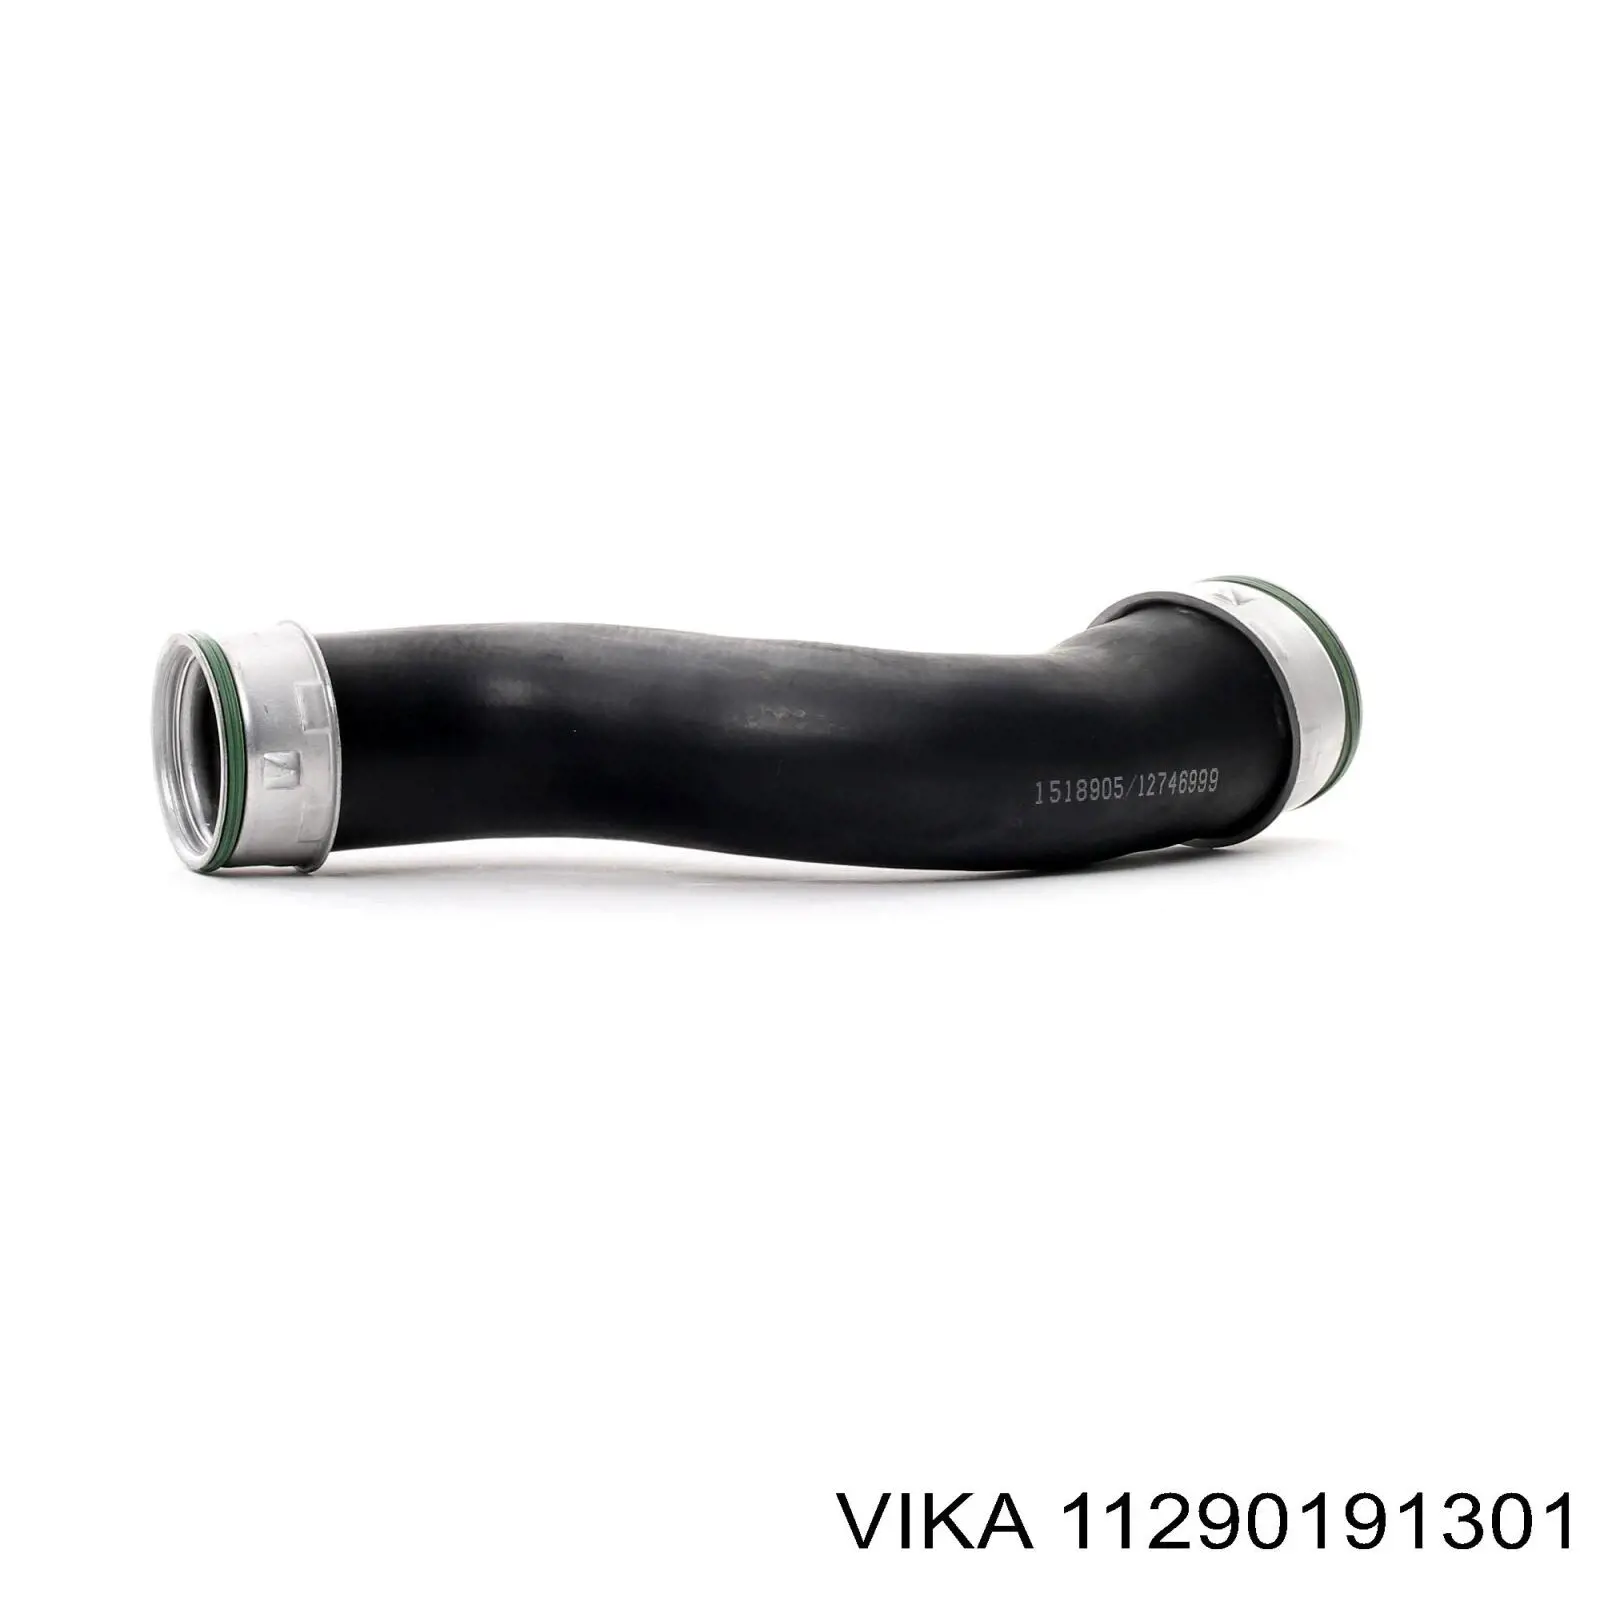 11290191301 Vika cano derivado de ar, entrada de filtro de ar